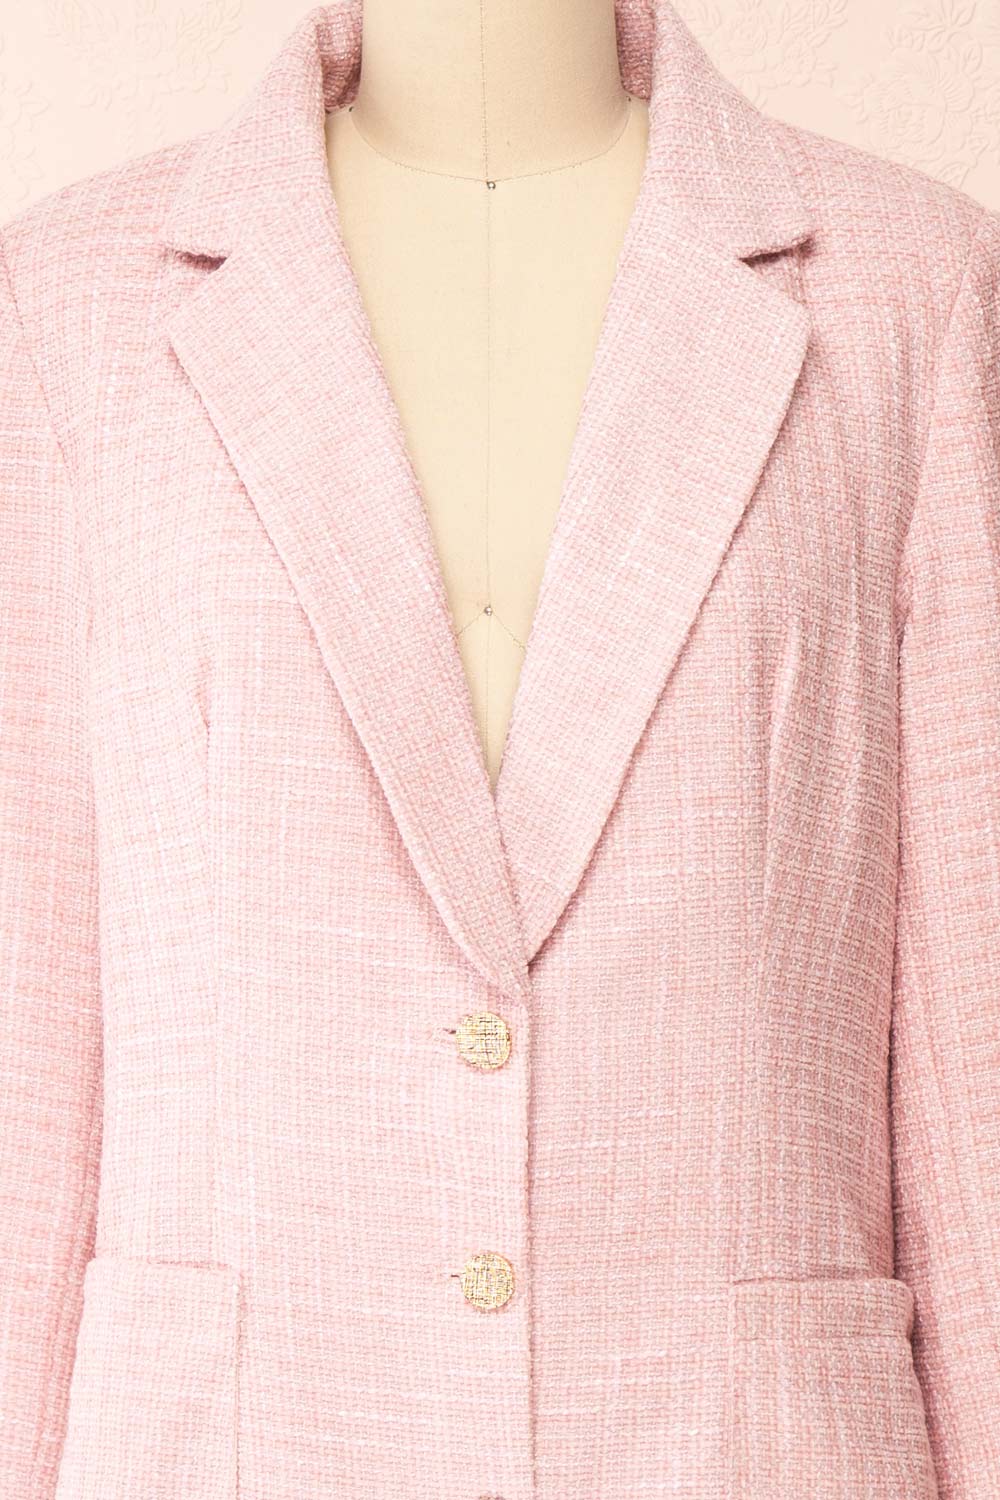 Dionne Pink Vintage Style Tweed Blazer | Boutique 1861 front close-up